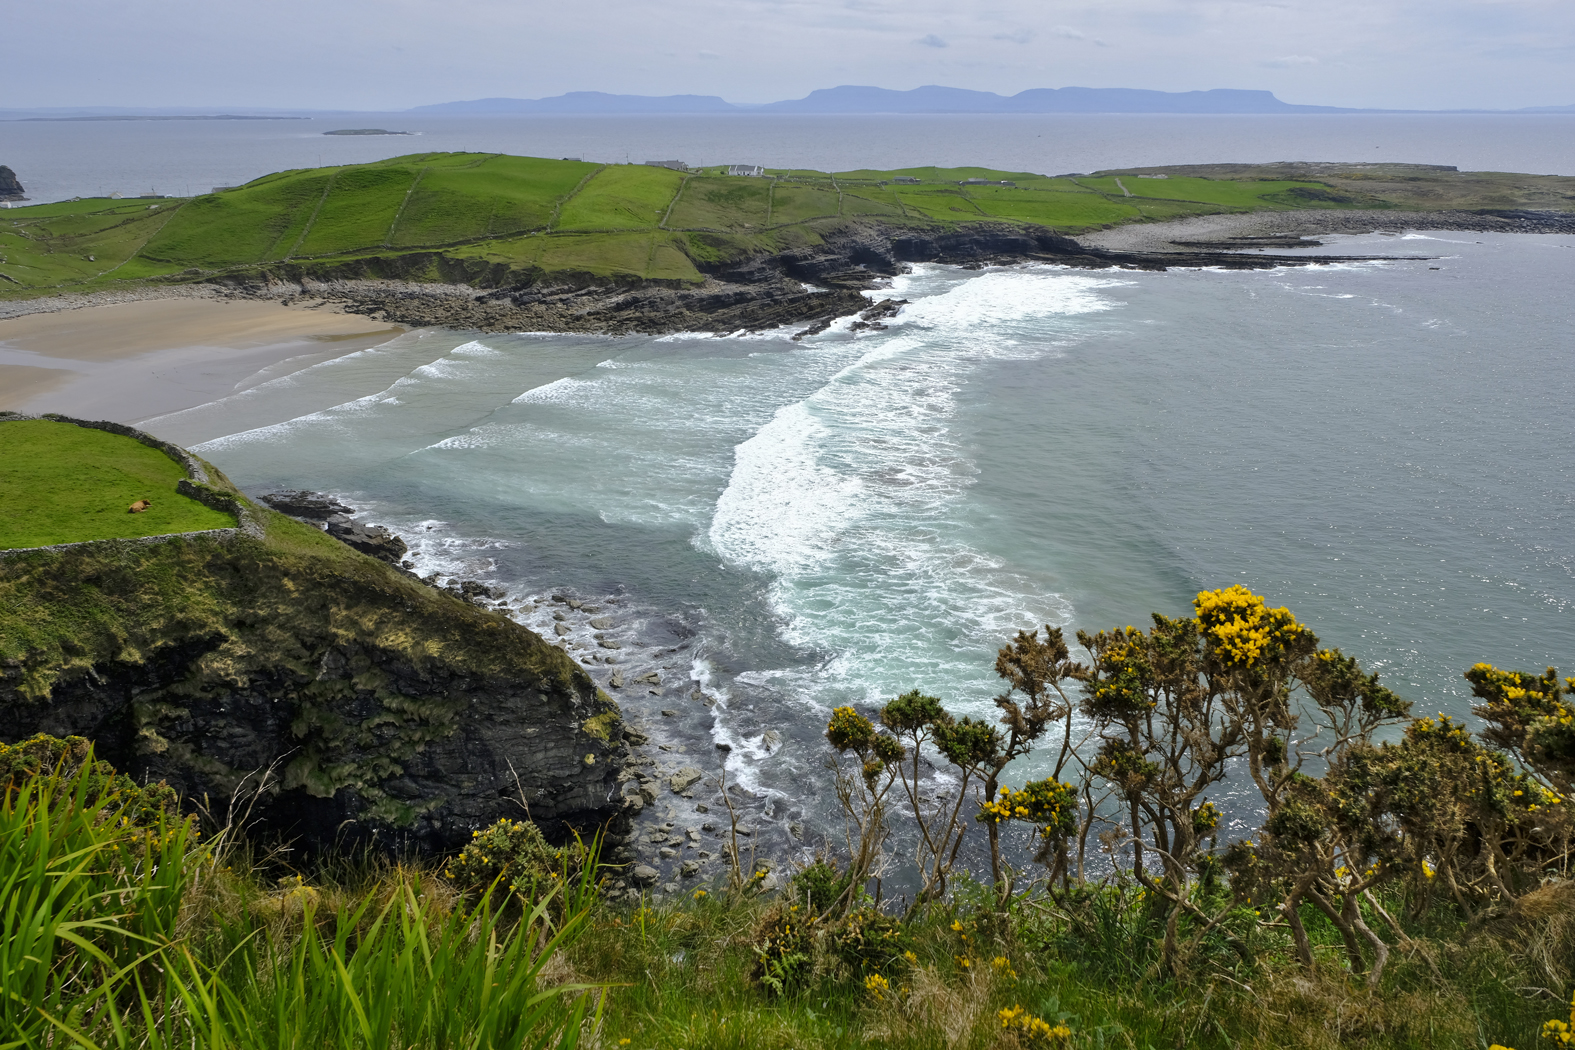  Wild Atlantic Way, Donegal Ireland    